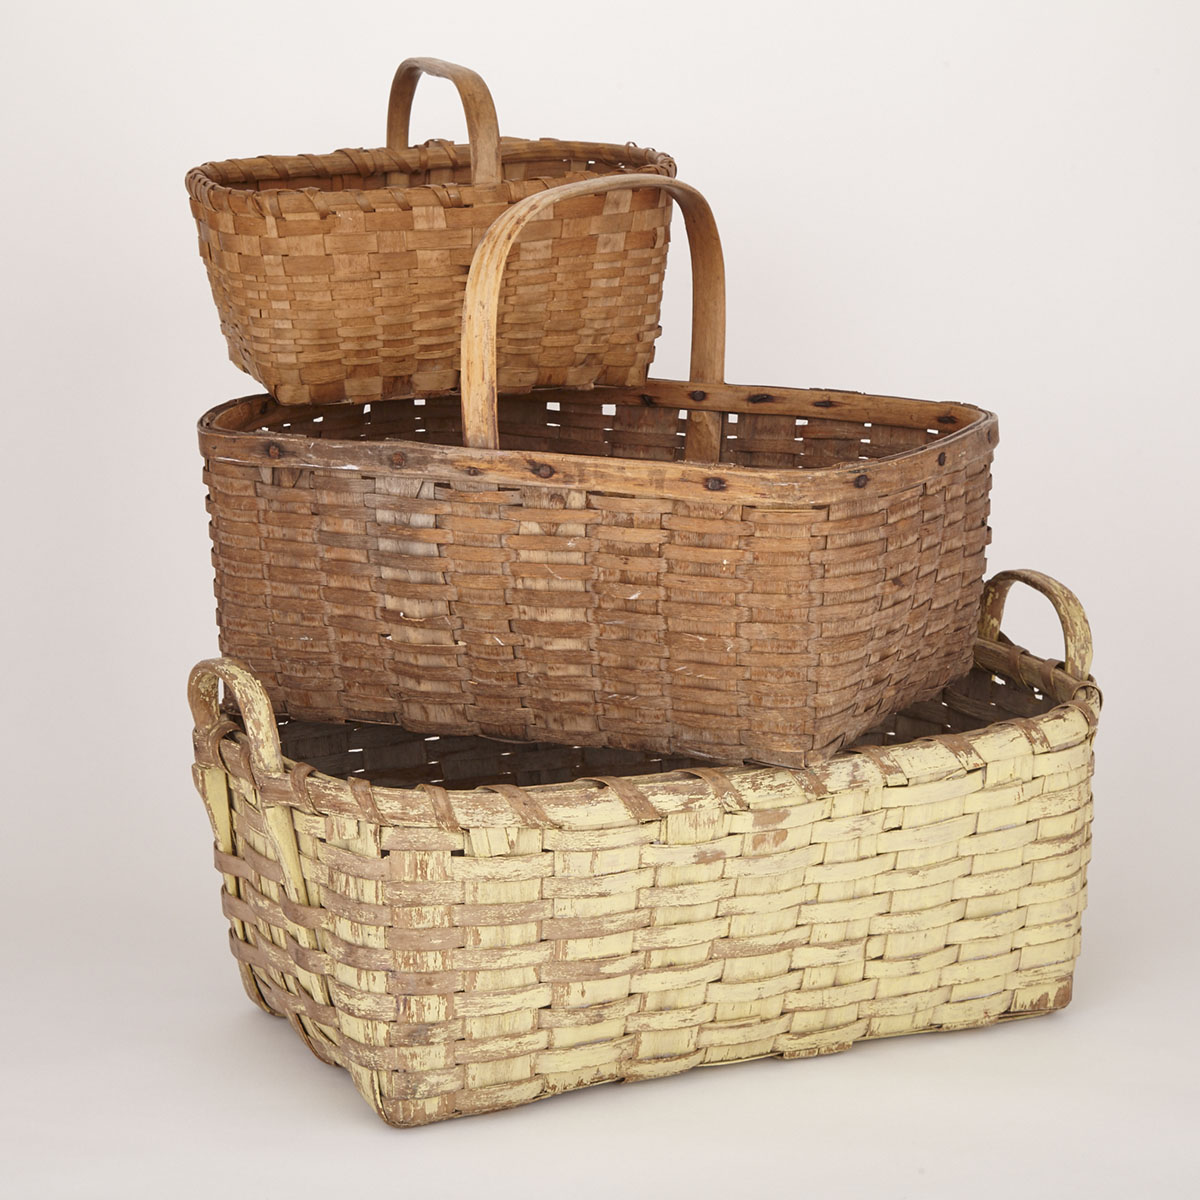 Three Splint Baskets, 19th century